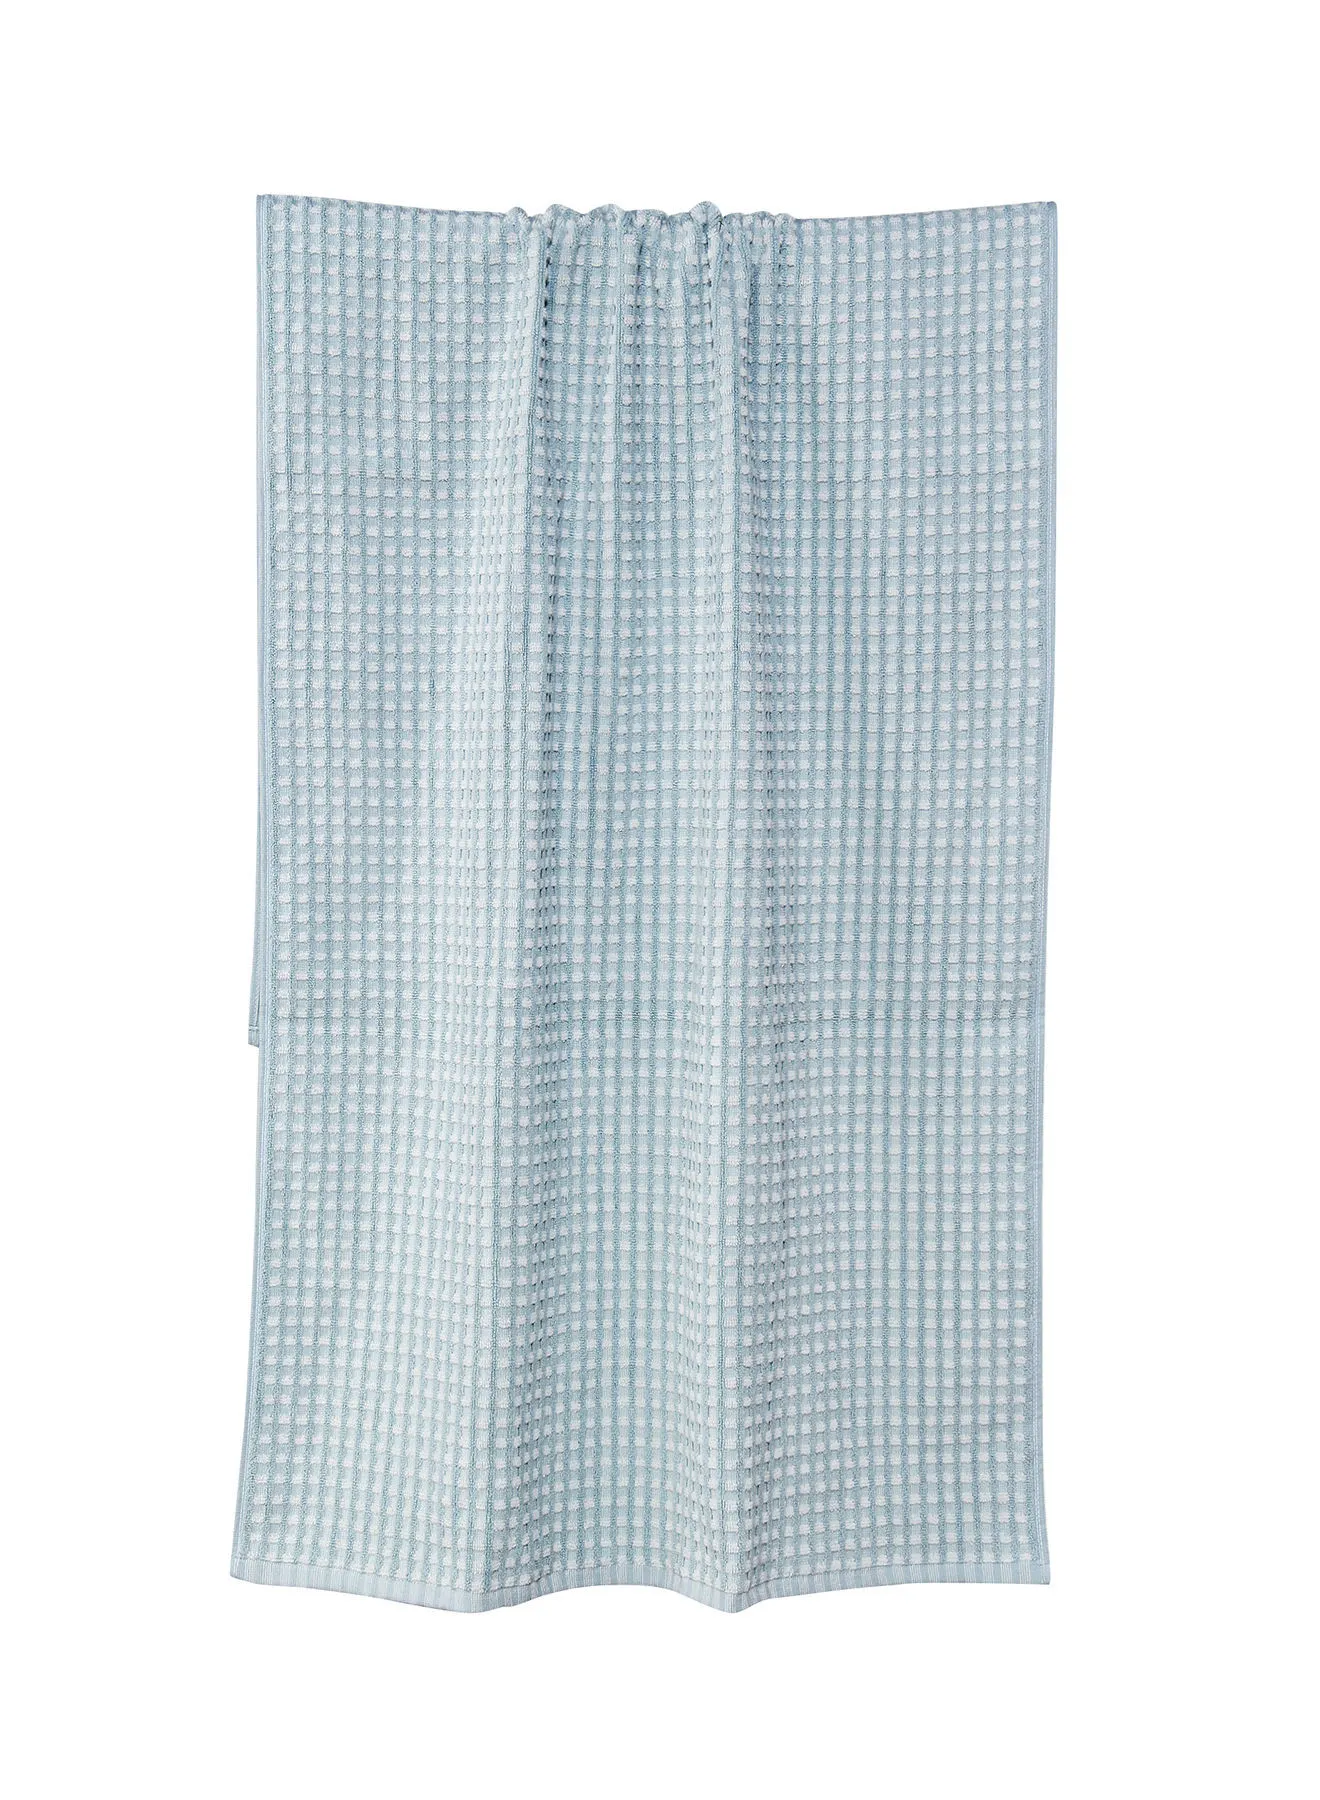 Hometown 6 Pack  Bathroom Towel Set - 500 GSM 100% Cotton Yarn Dyed Jacquard - Blue Color -Economical